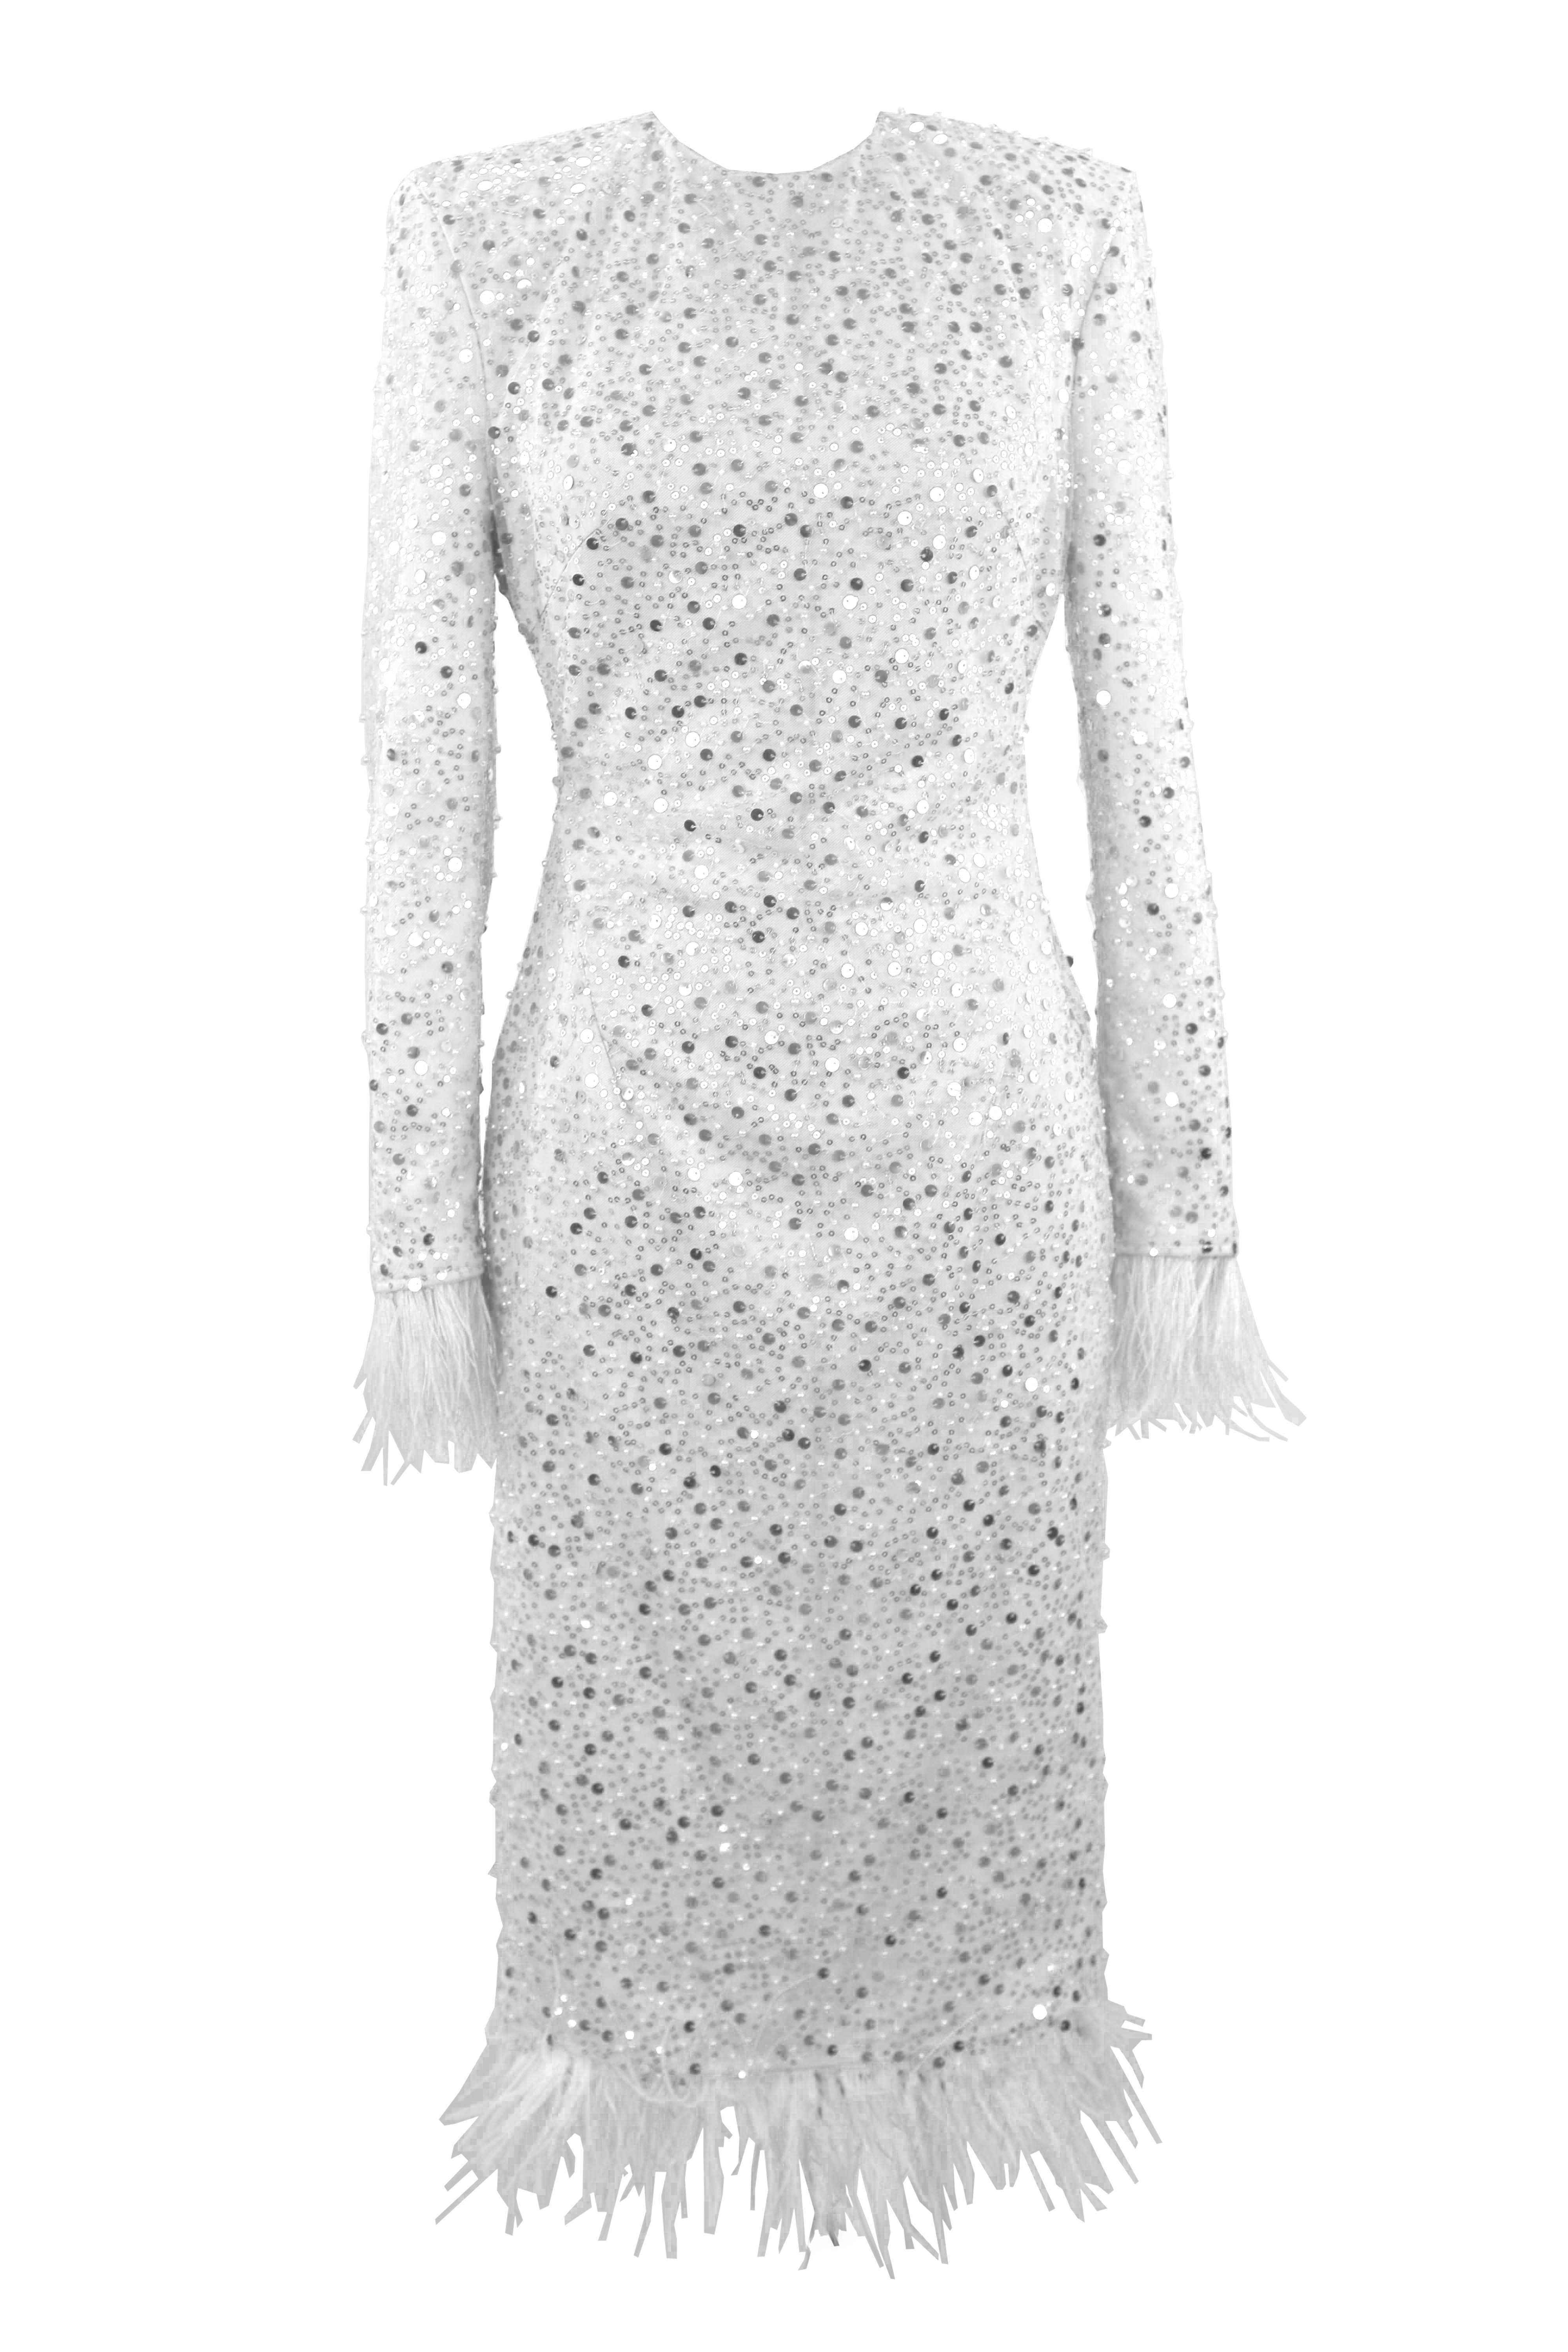 R24173 - WHITE 01 - LUCIA white embroidery midi dress with feathers AMBAR STUDIO